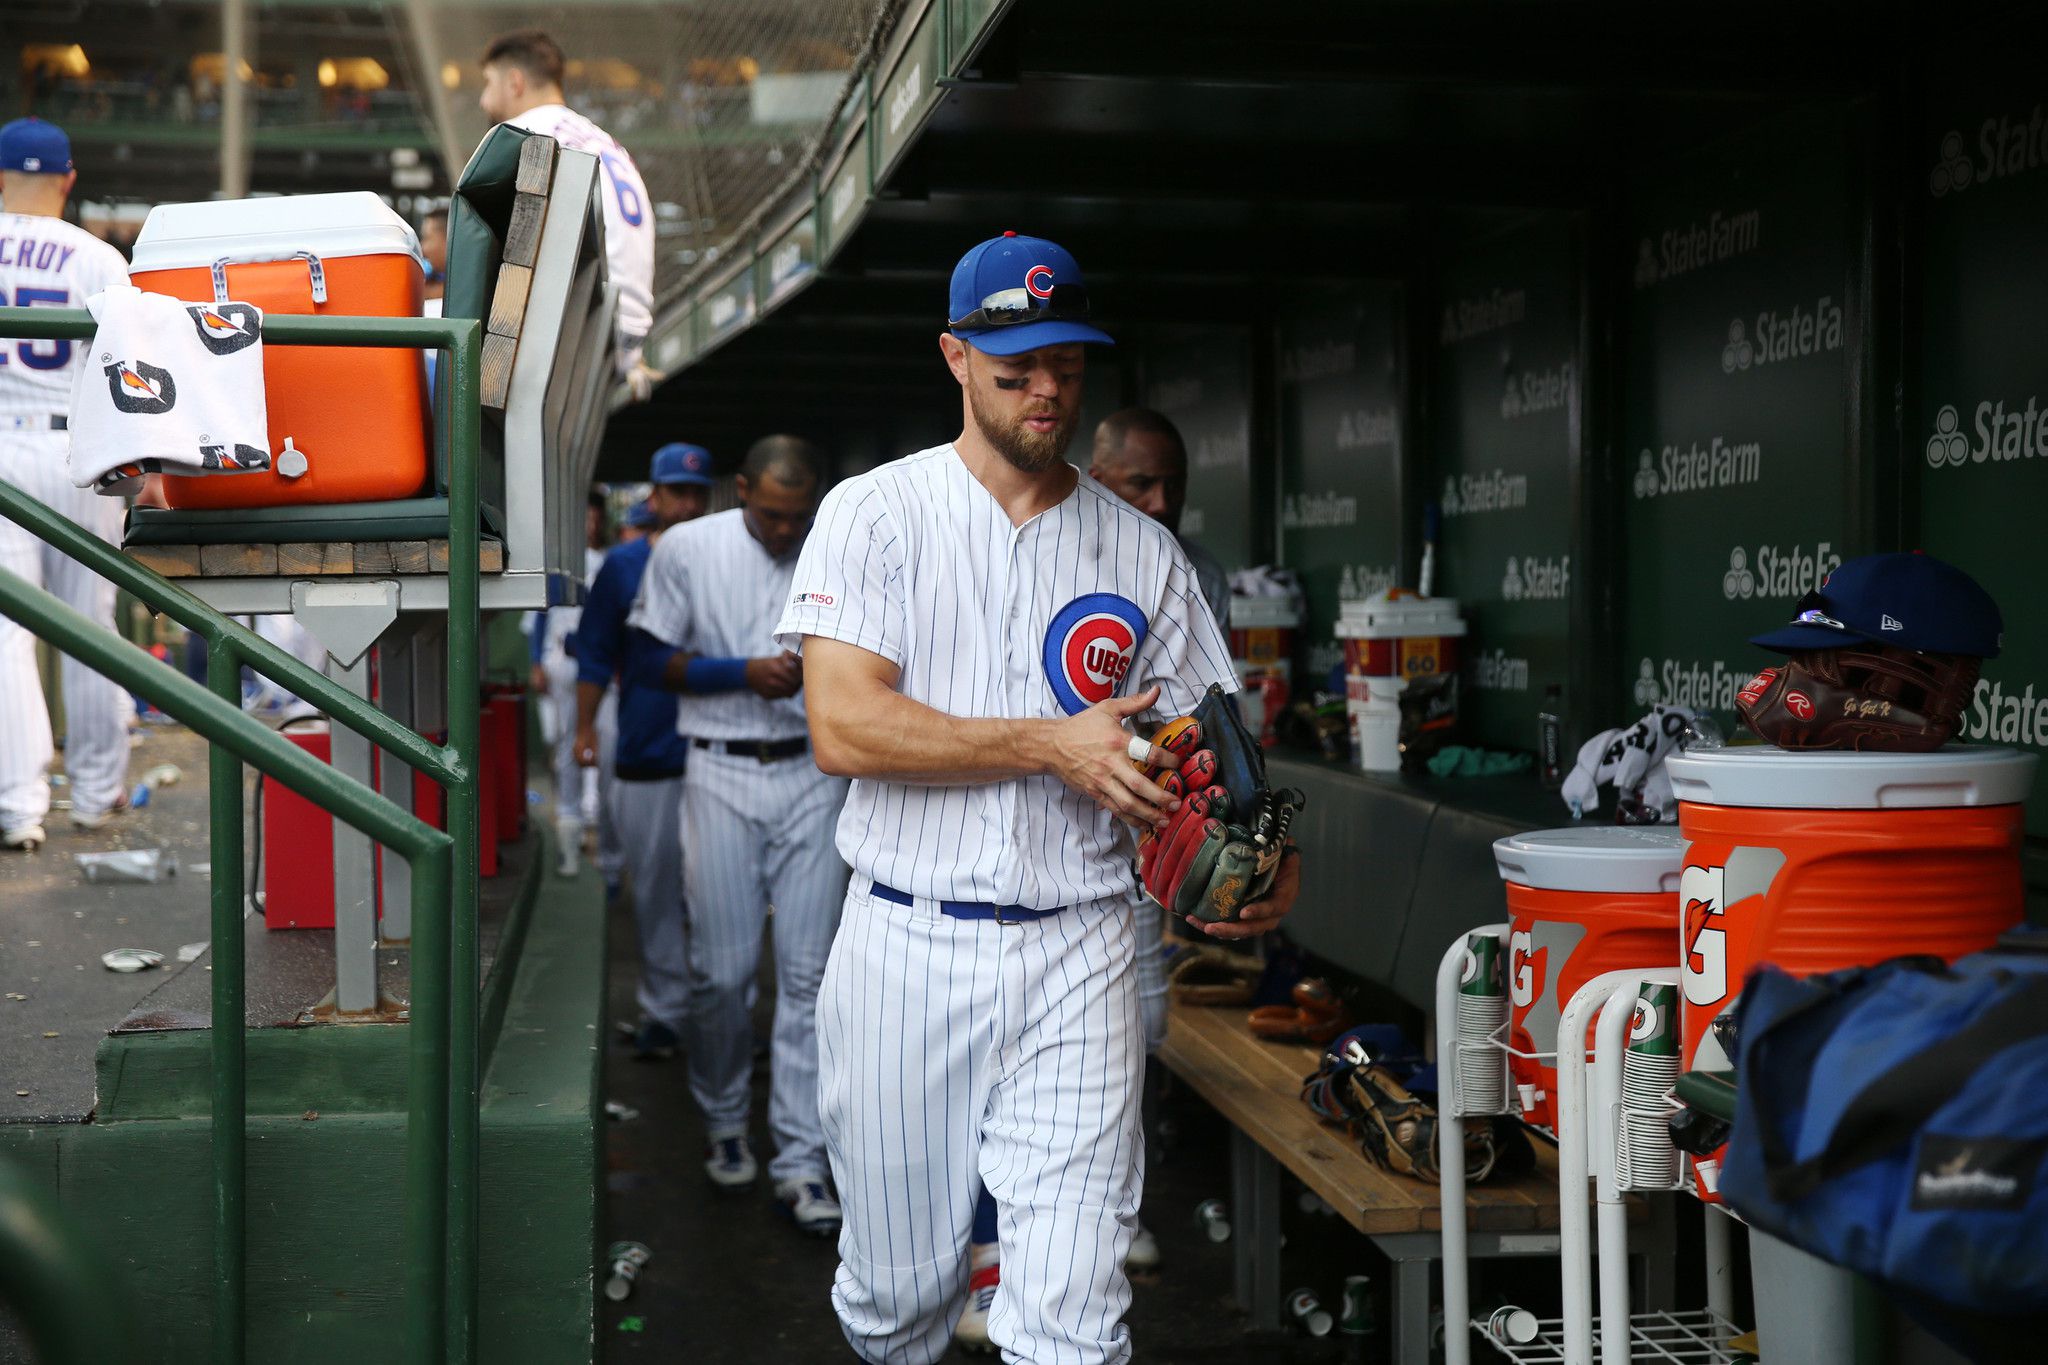 MLB: Cubs exploring bringing back Ben Zobrist in operations role